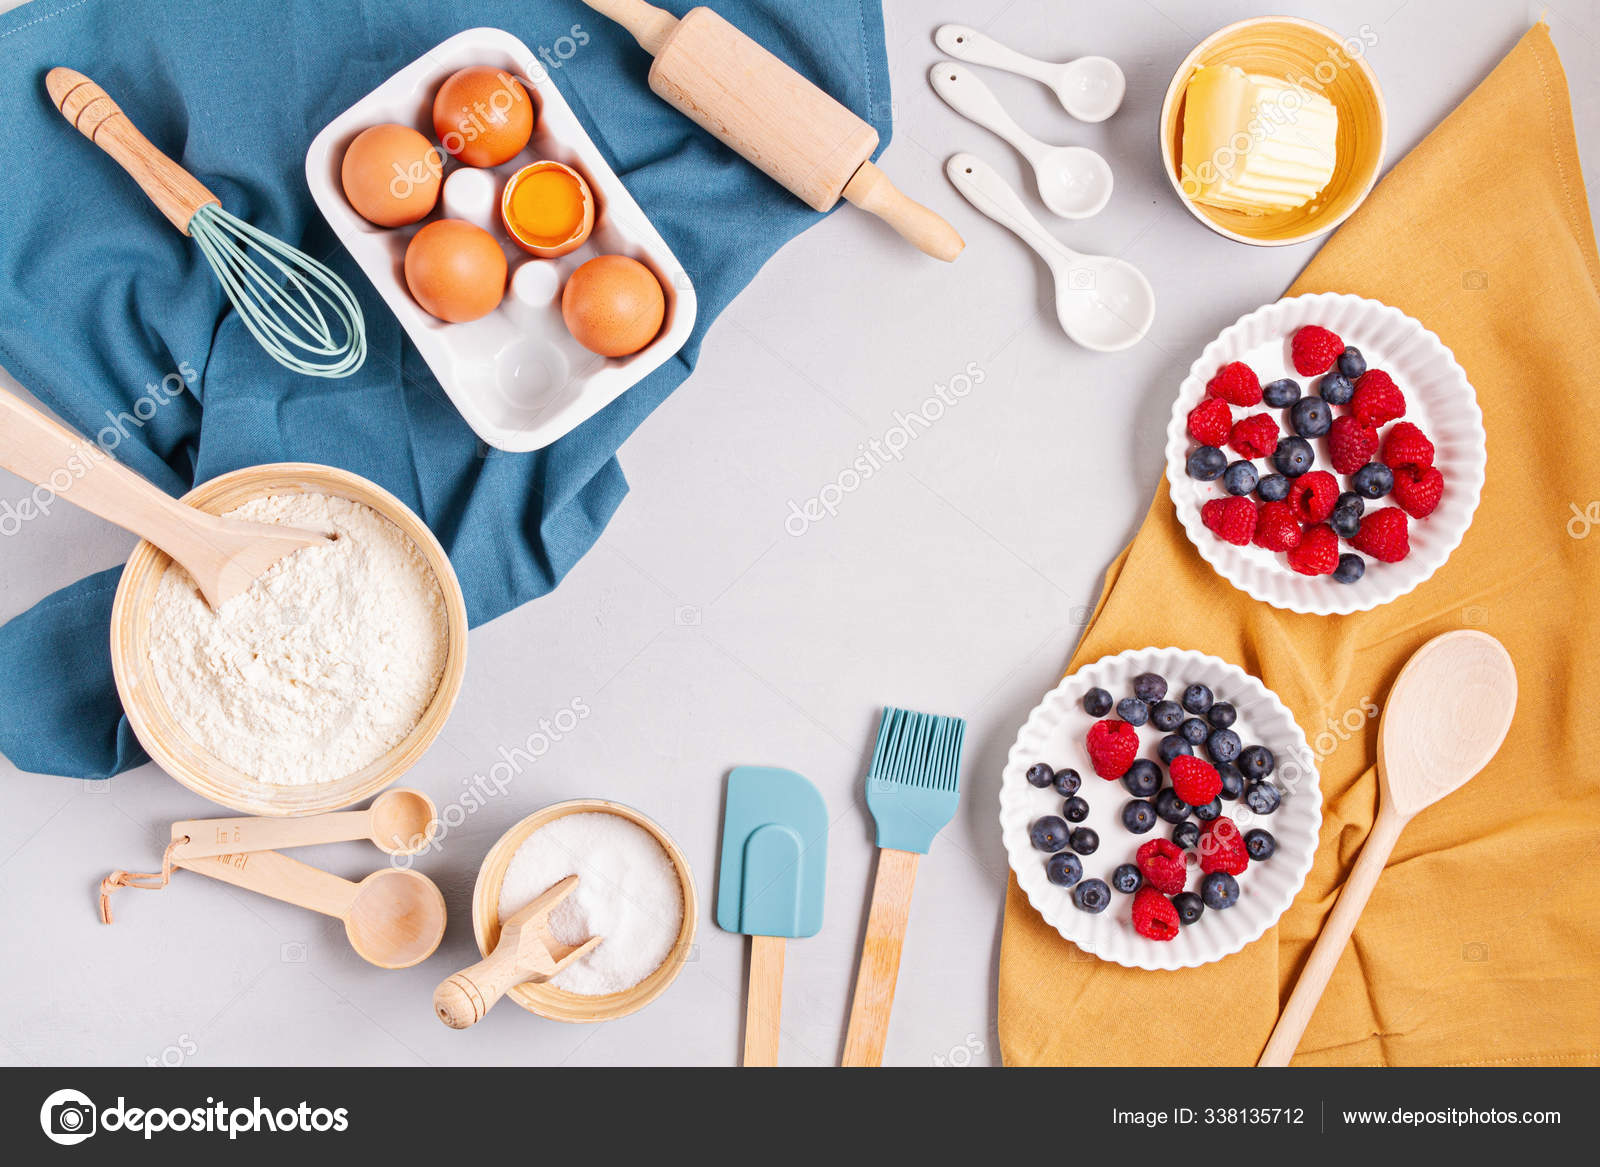 https://st3.depositphotos.com/17107776/33813/i/1600/depositphotos_338135712-stock-photo-rustic-baking-ingredients-kitchen-utensils.jpg